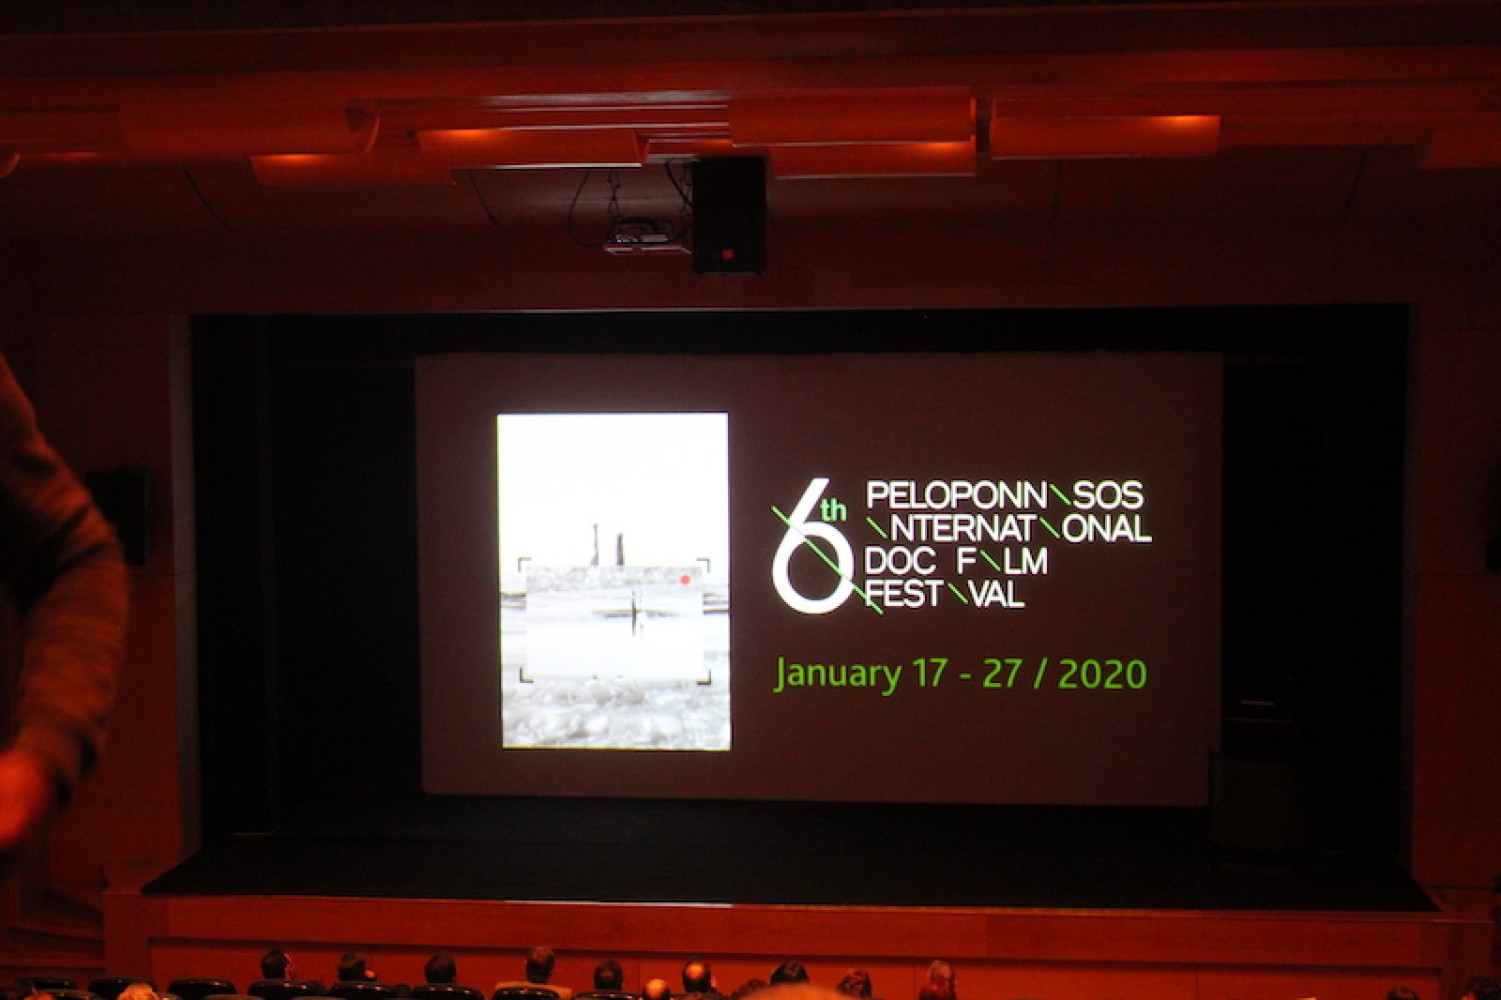 Tο IEK ΔΕΛΤΑ 360 στο 6ο Διεθνές Φεστιβάλ Ντοκιμαντέρ Πελοποννήσου 